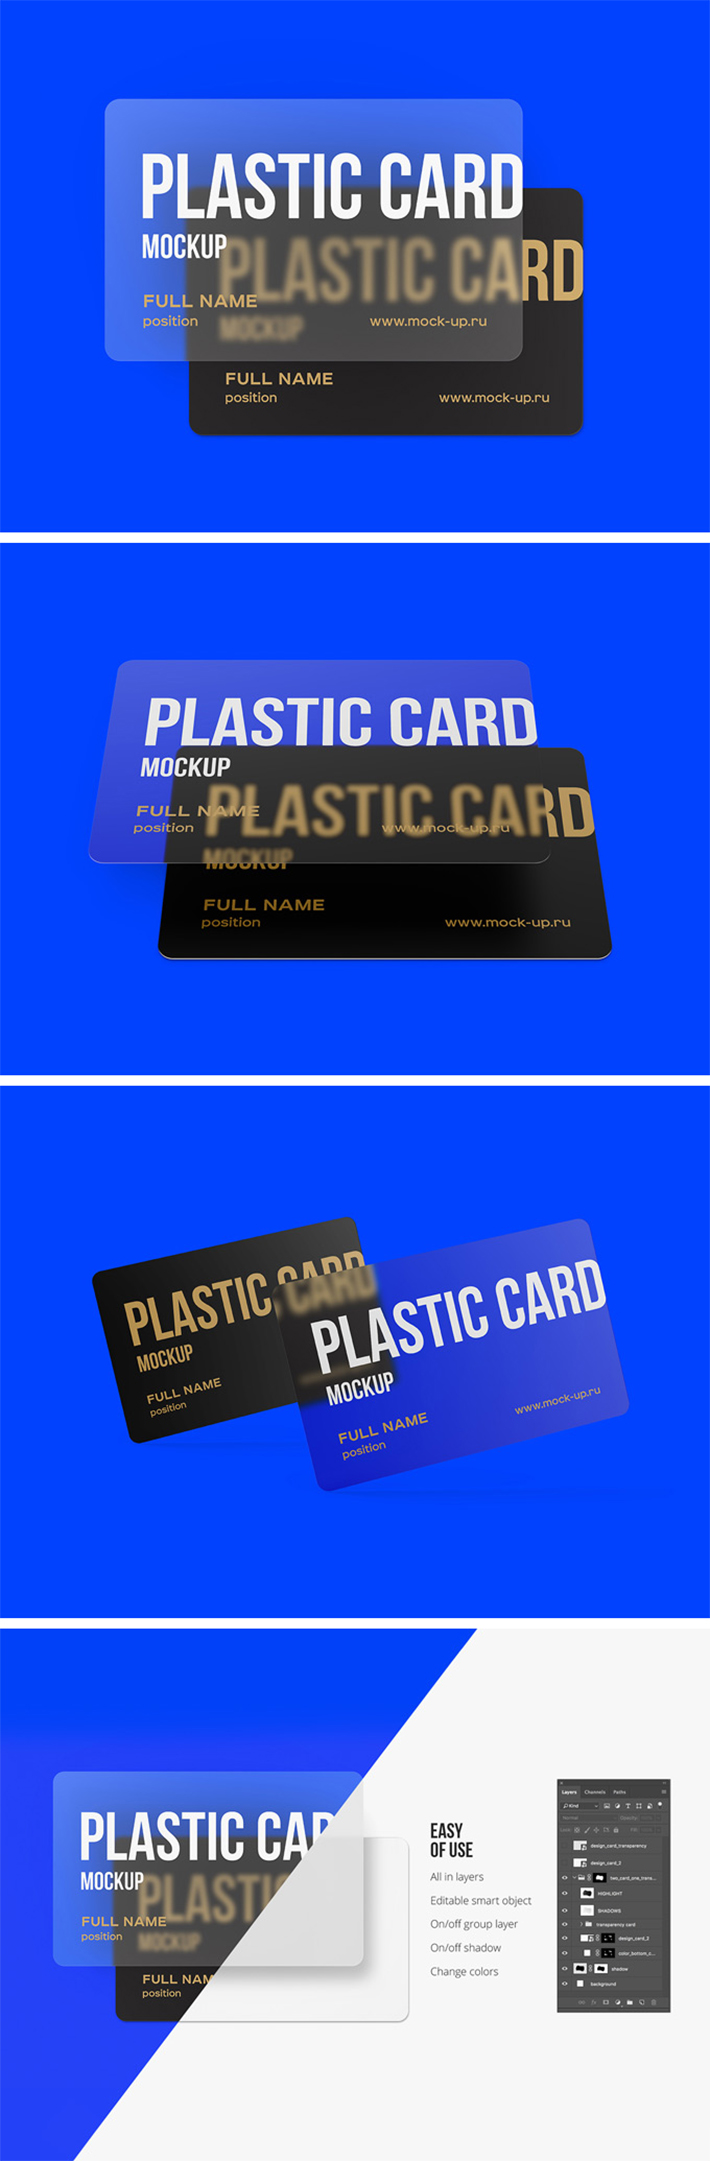 Creative Plastic Card PSD Mockup